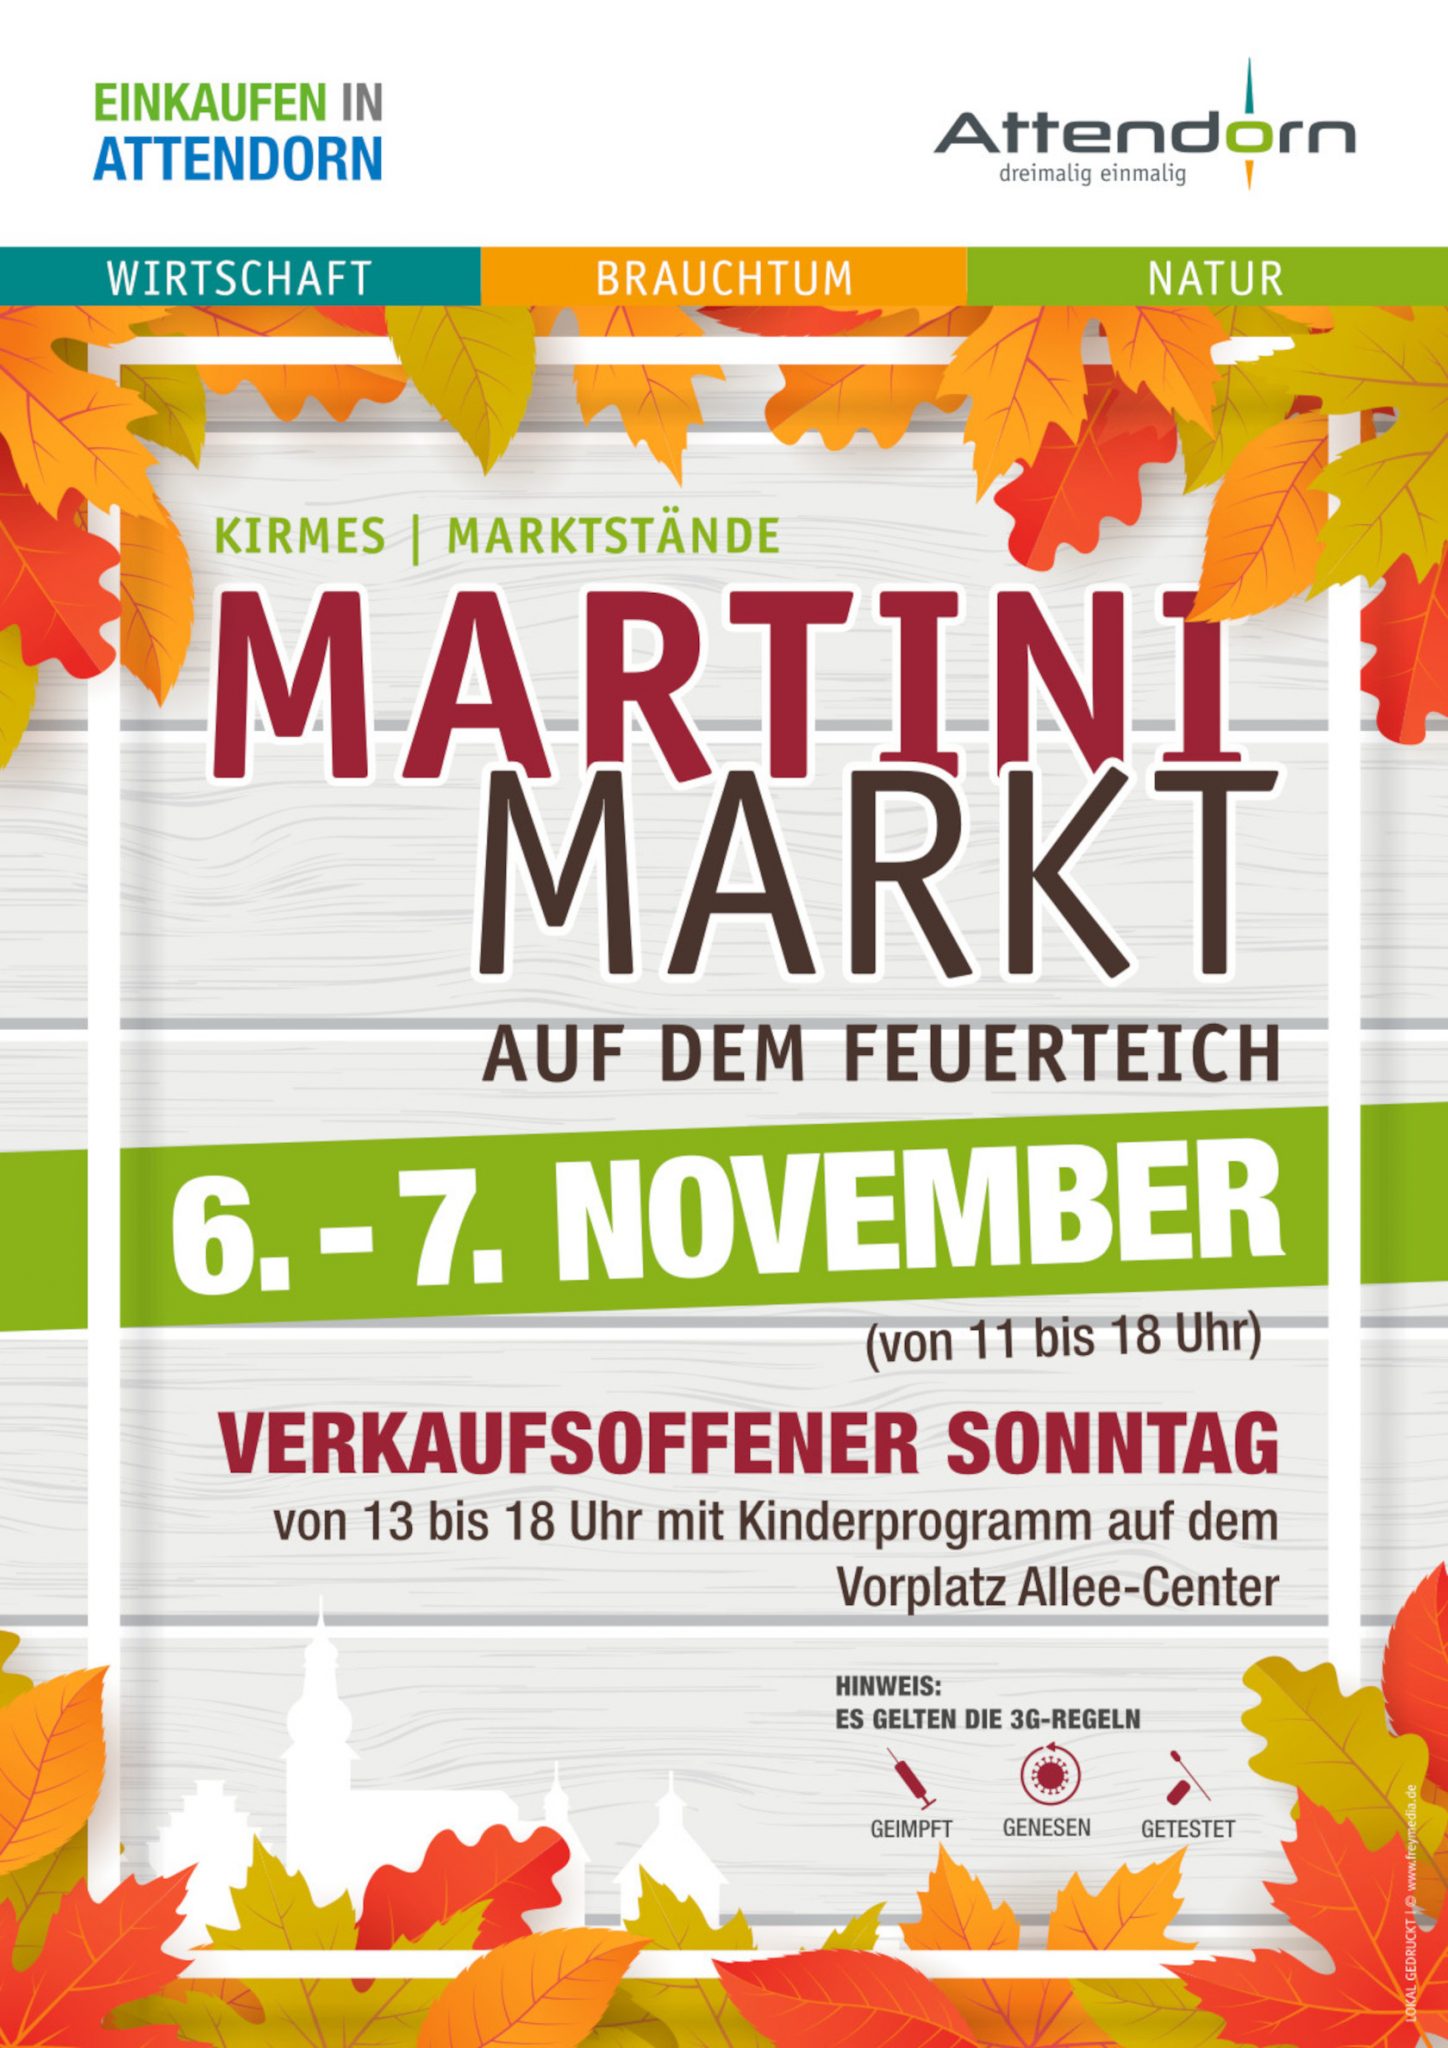 stadt attendorn plakat martini markt 2021 a3 scaled